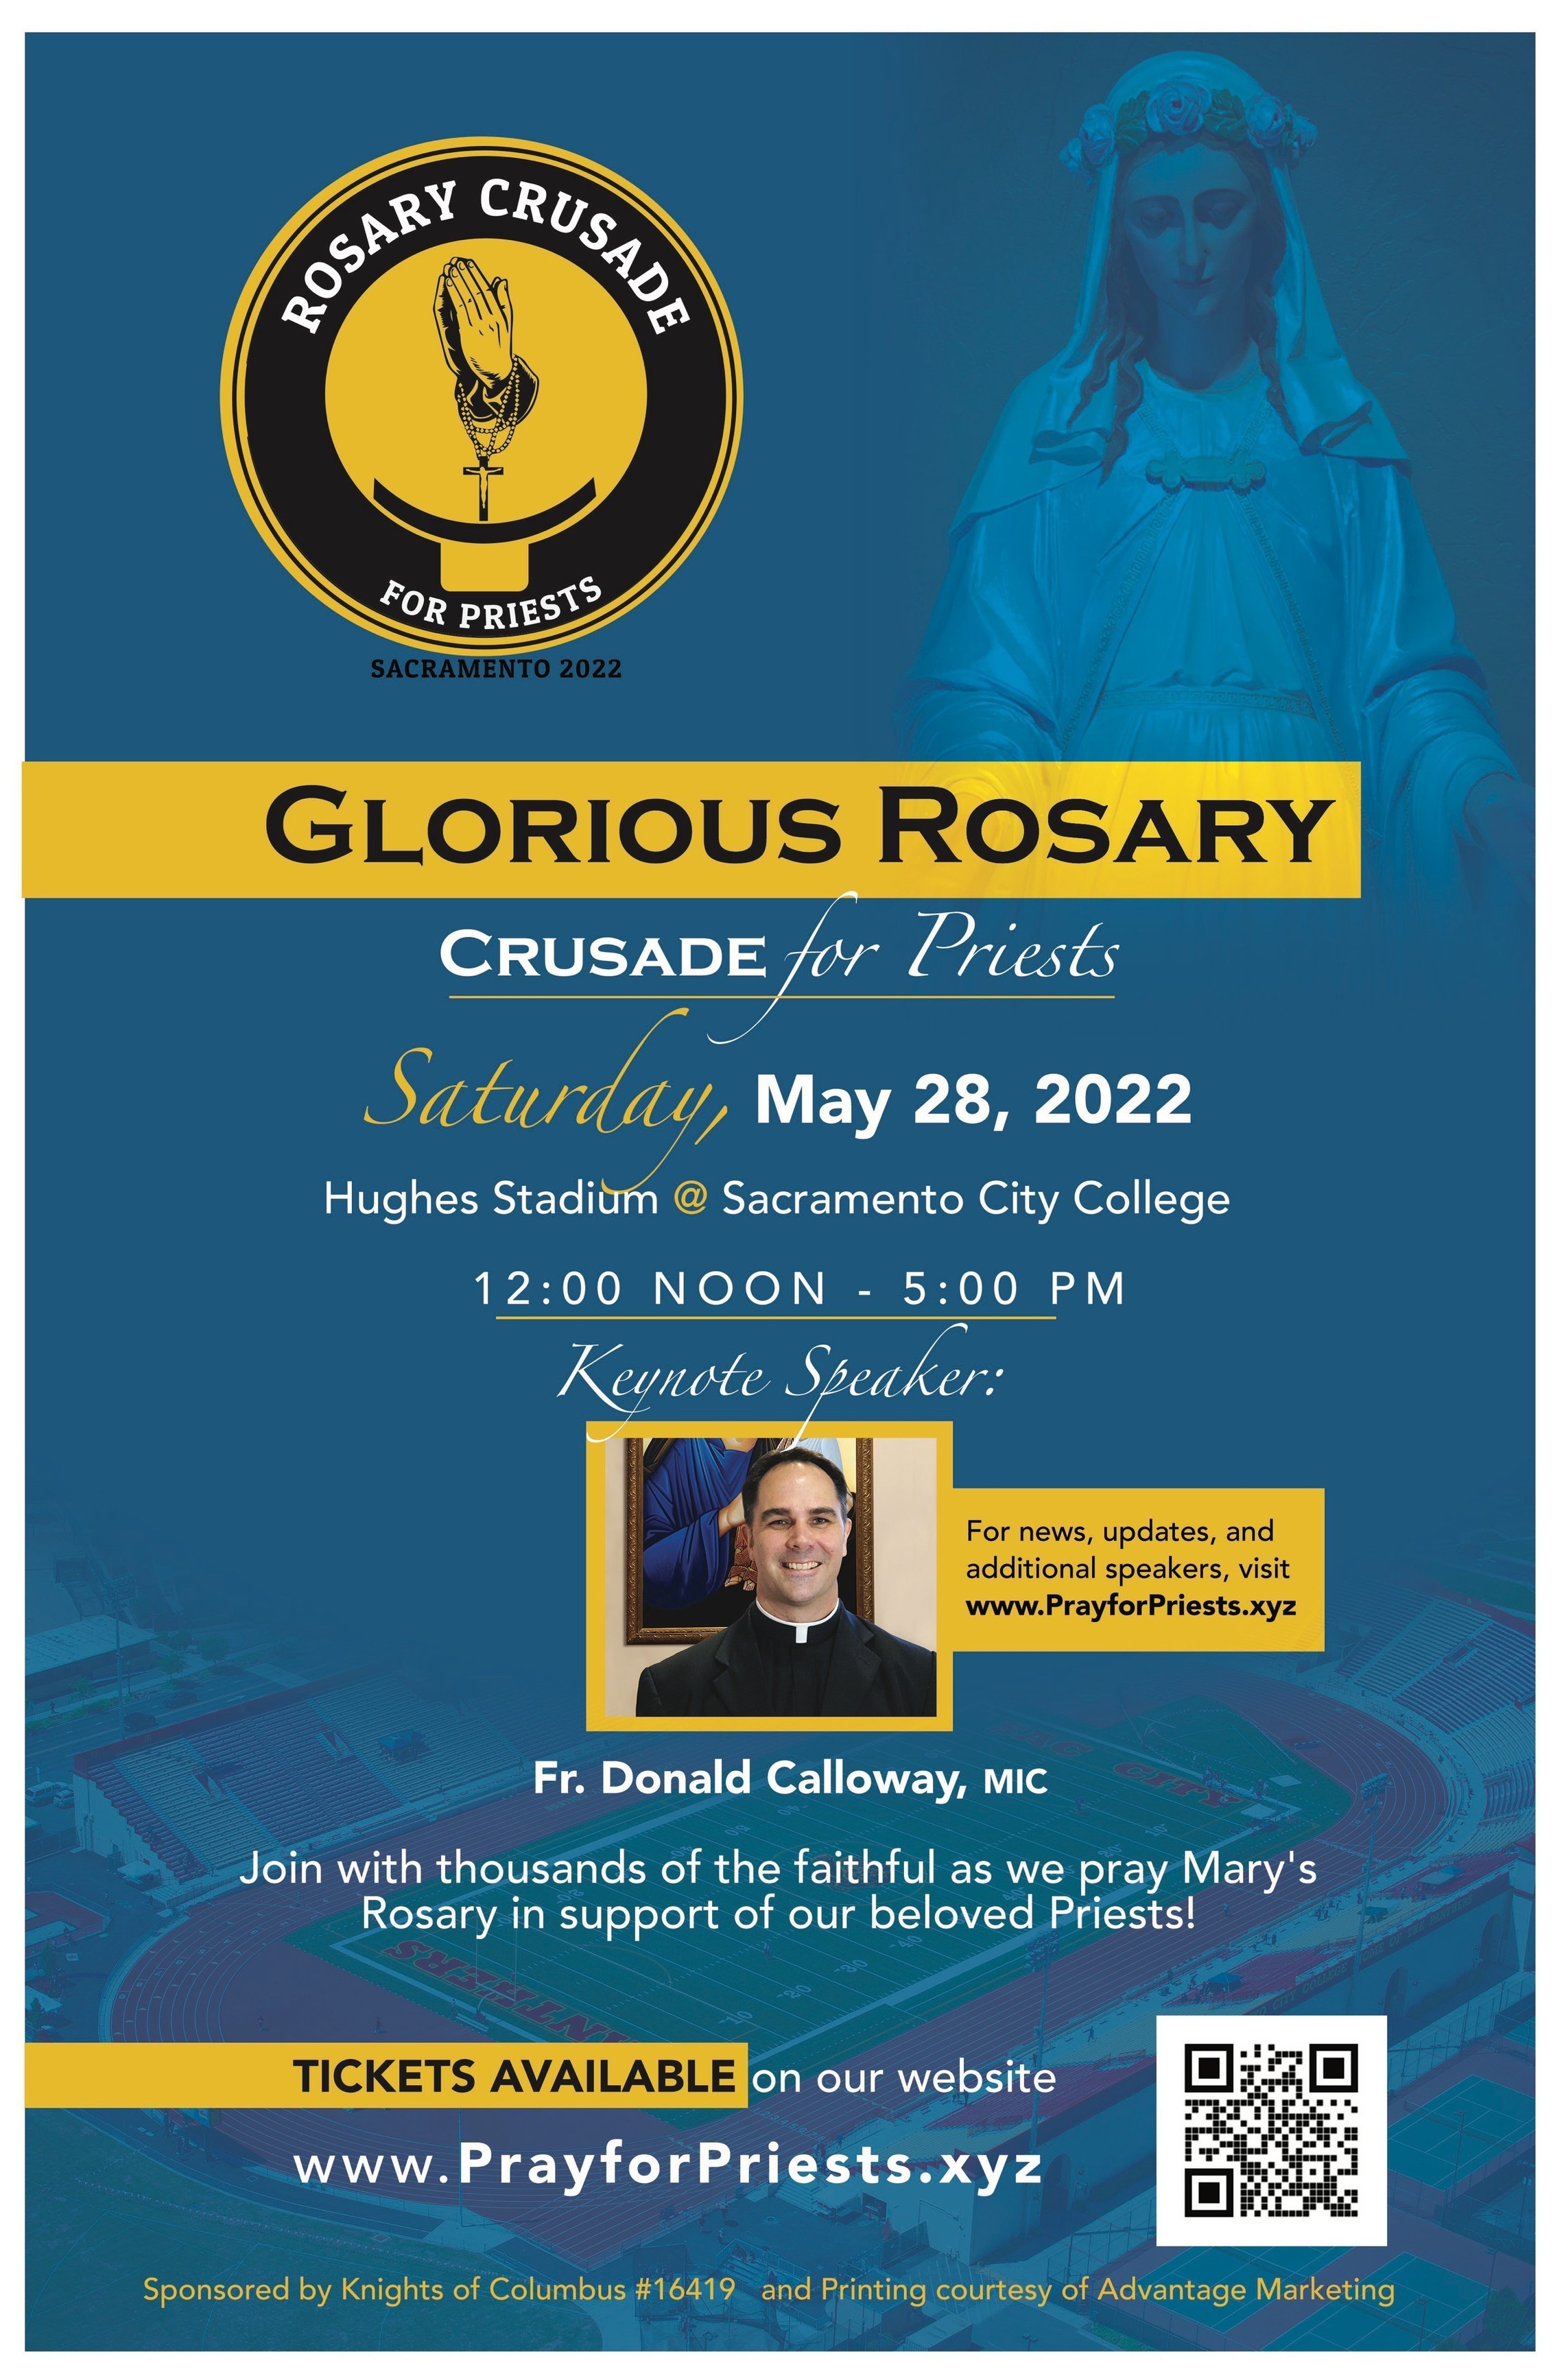 Glorious Rosary Crusade For Priests